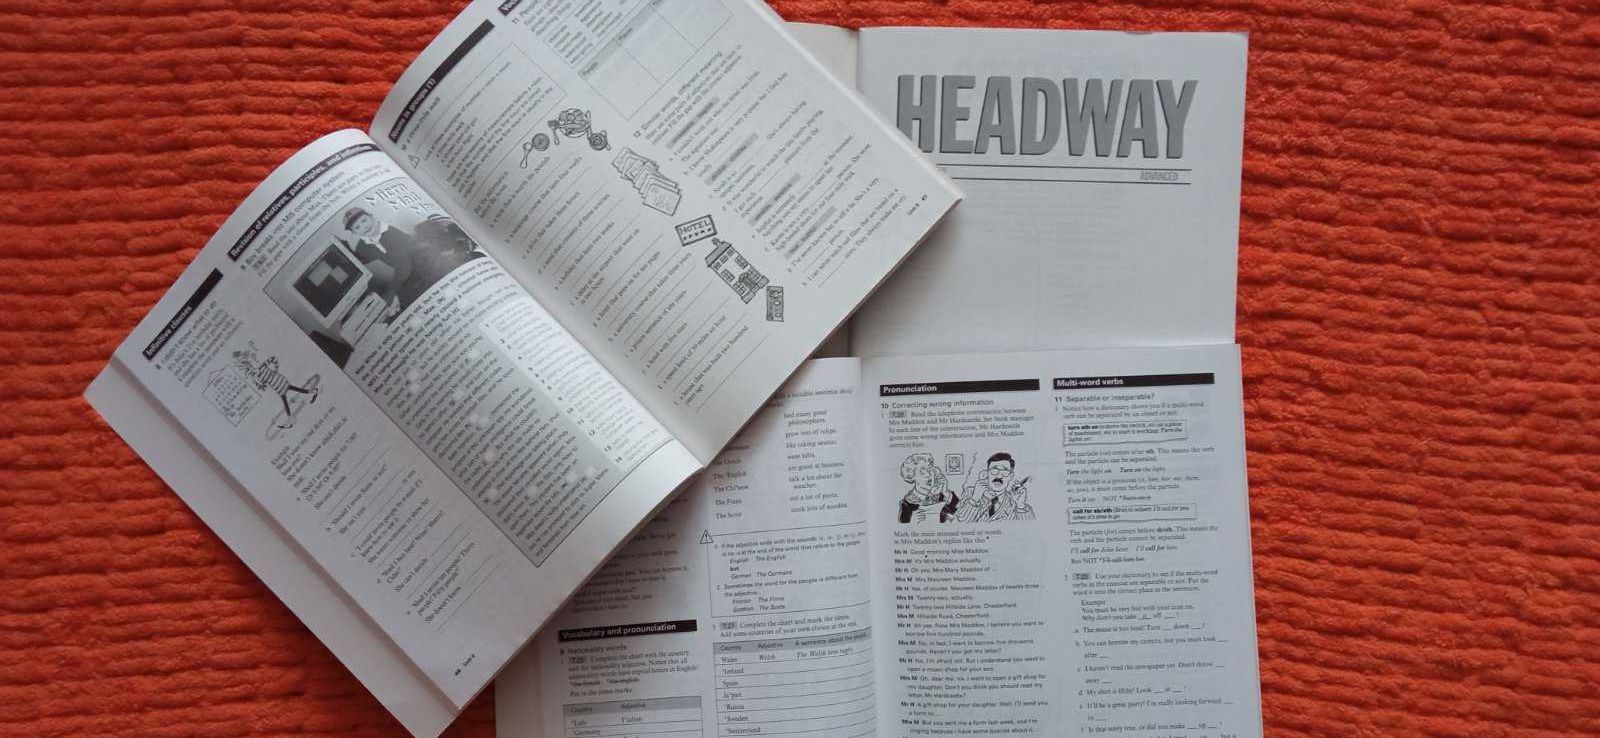 Изучение английского языка. Книга-тетрадь "New headway english course"